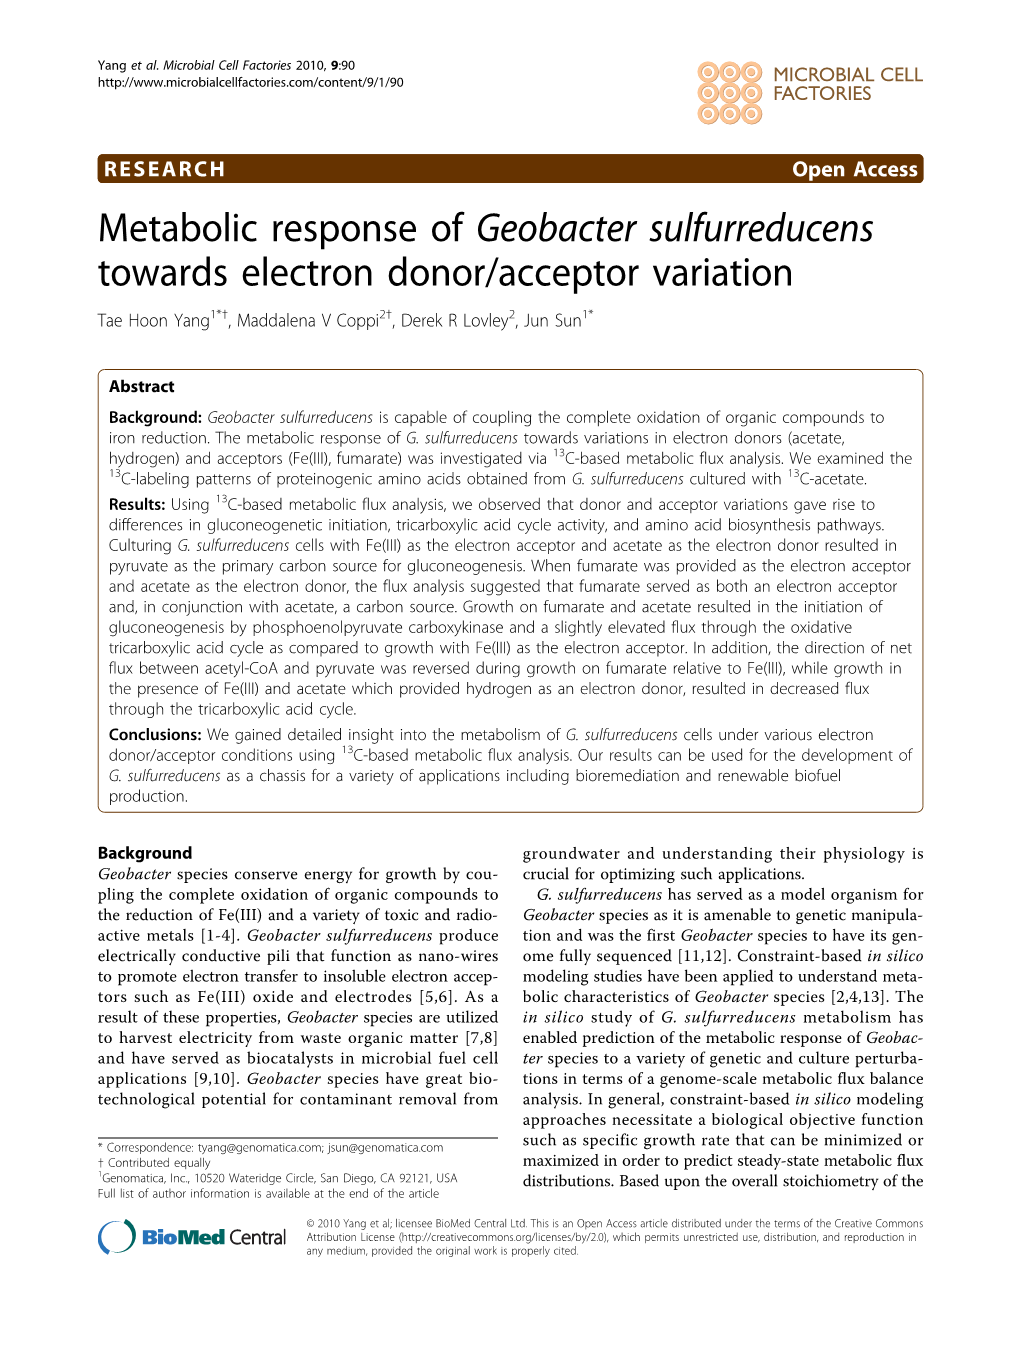 Metabolic Response of Geobacter Sulfurreducens Towards Electron Donor/Acceptor Variation Tae Hoon Yang1*†, Maddalena V Coppi2†, Derek R Lovley2, Jun Sun1*